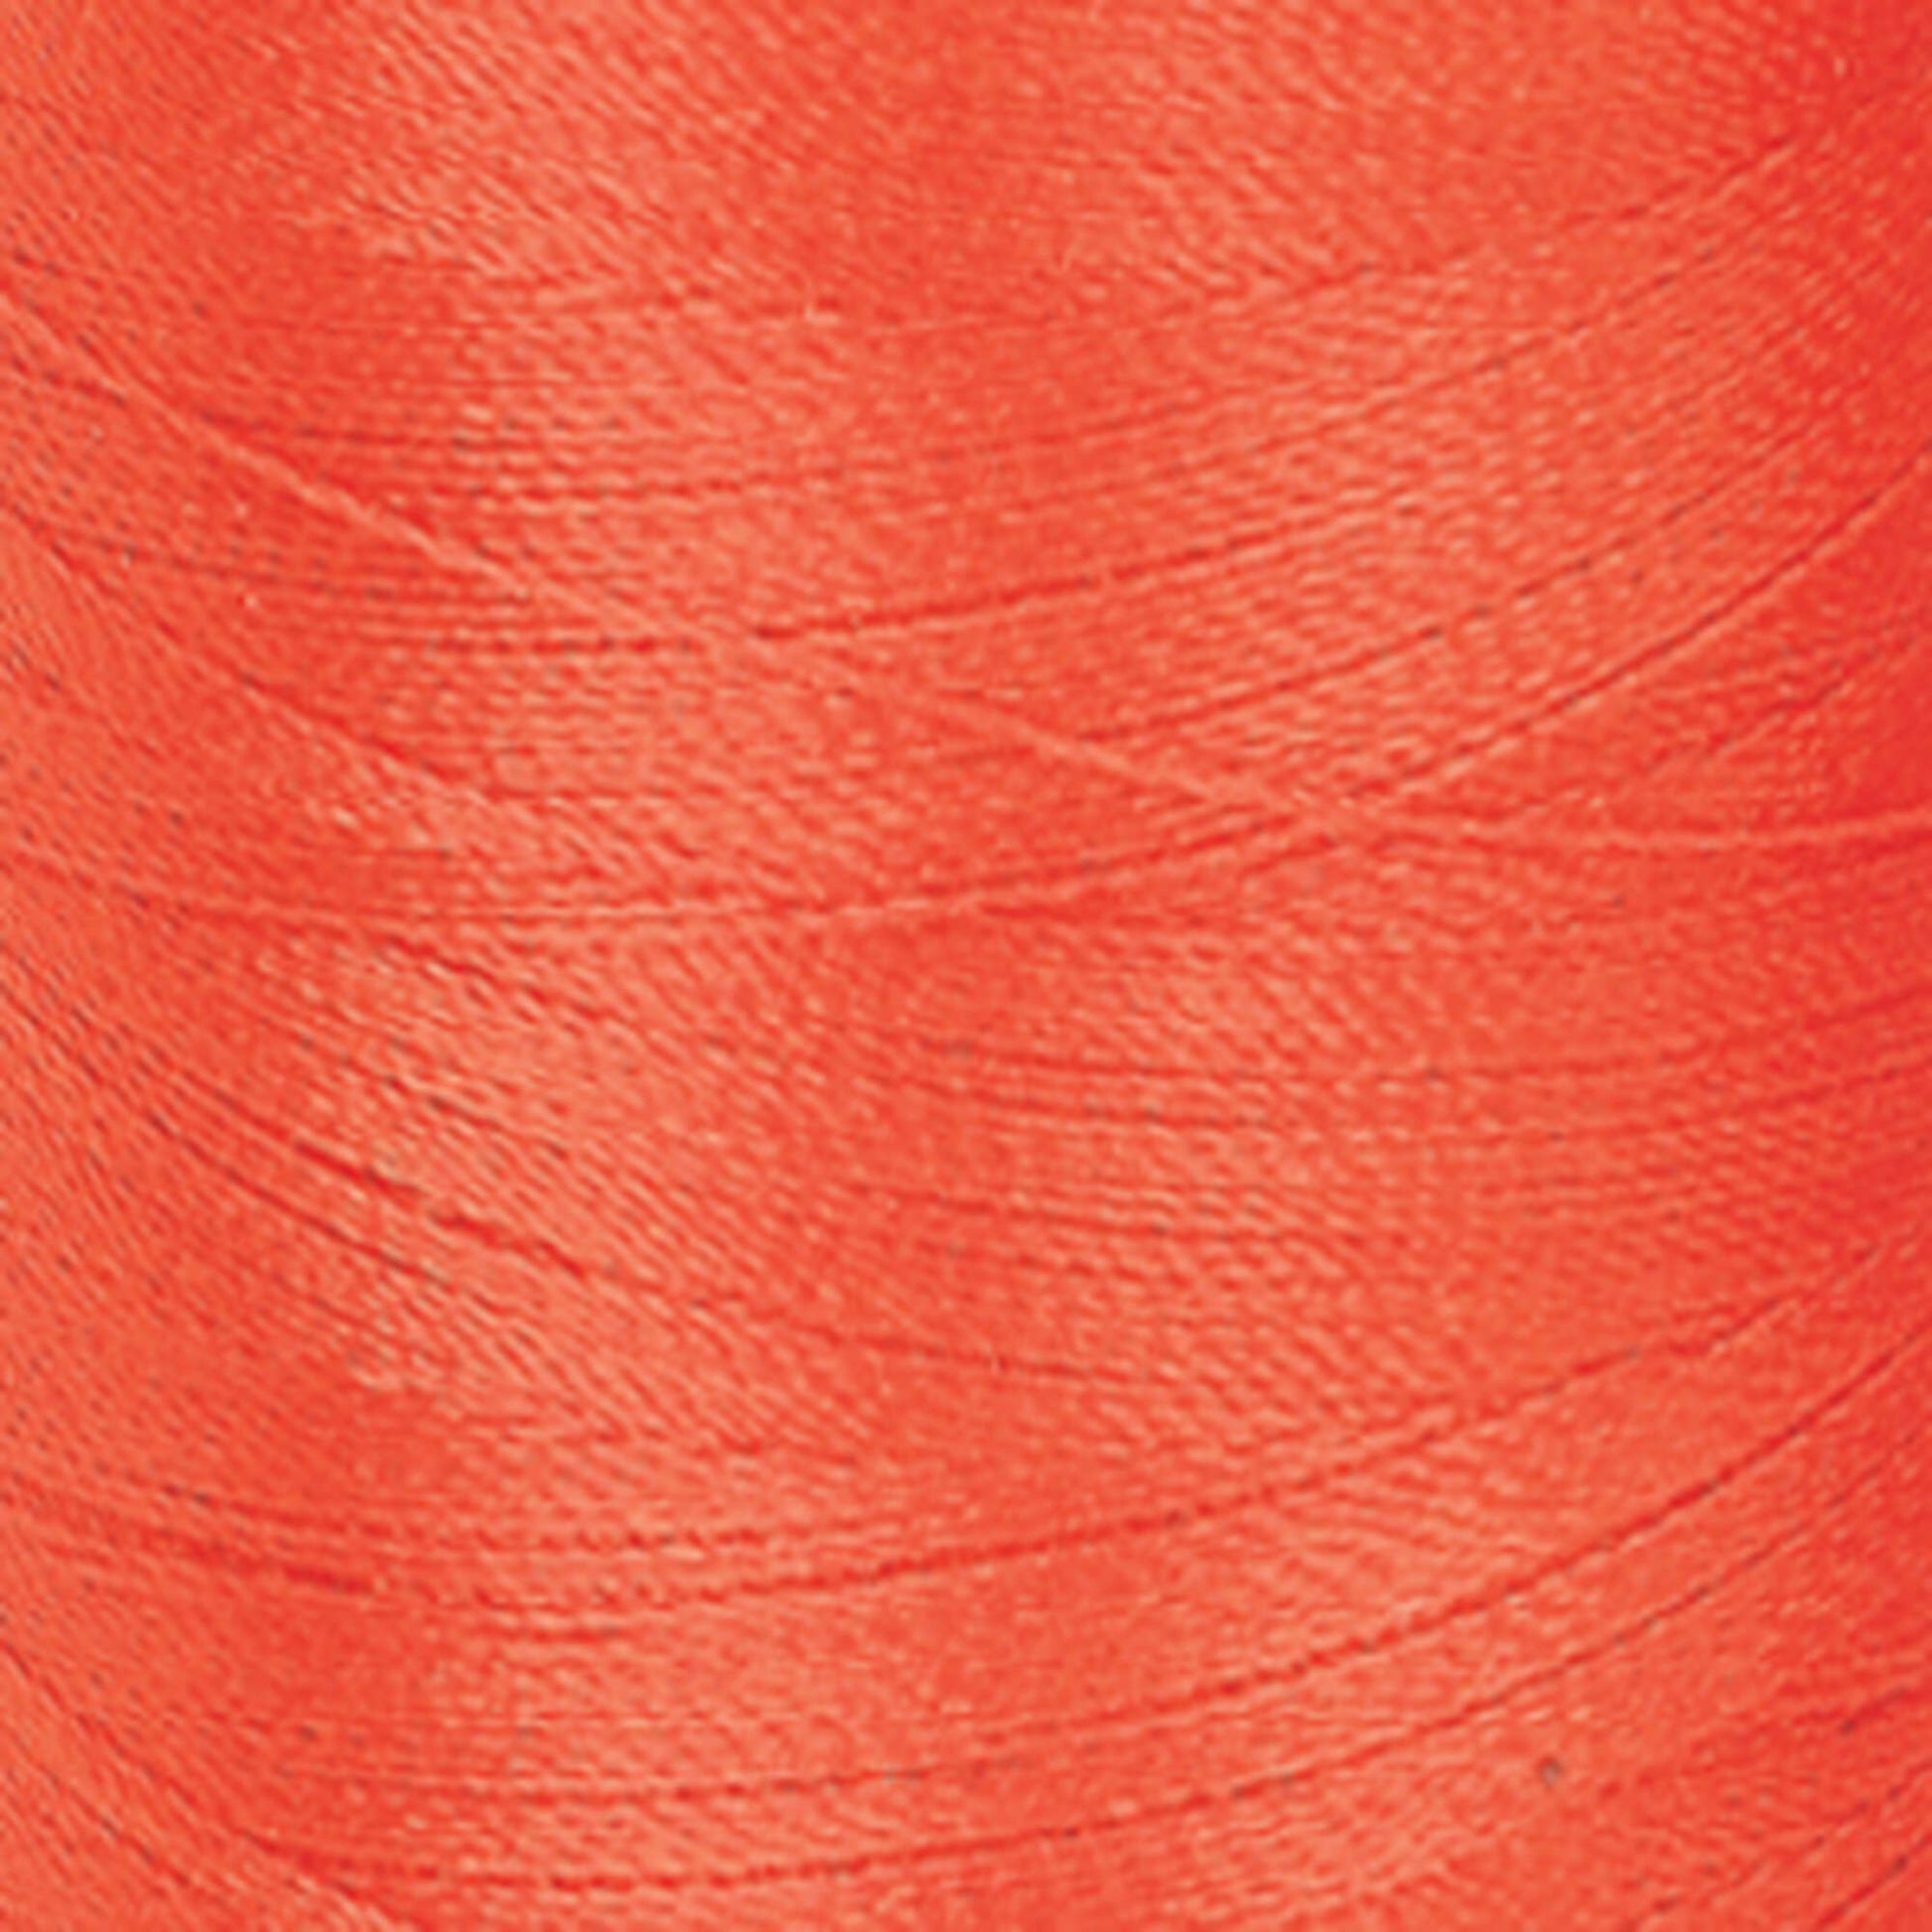 Coats & Clark Machine Embroidery Thread (1100 Yards) Tango